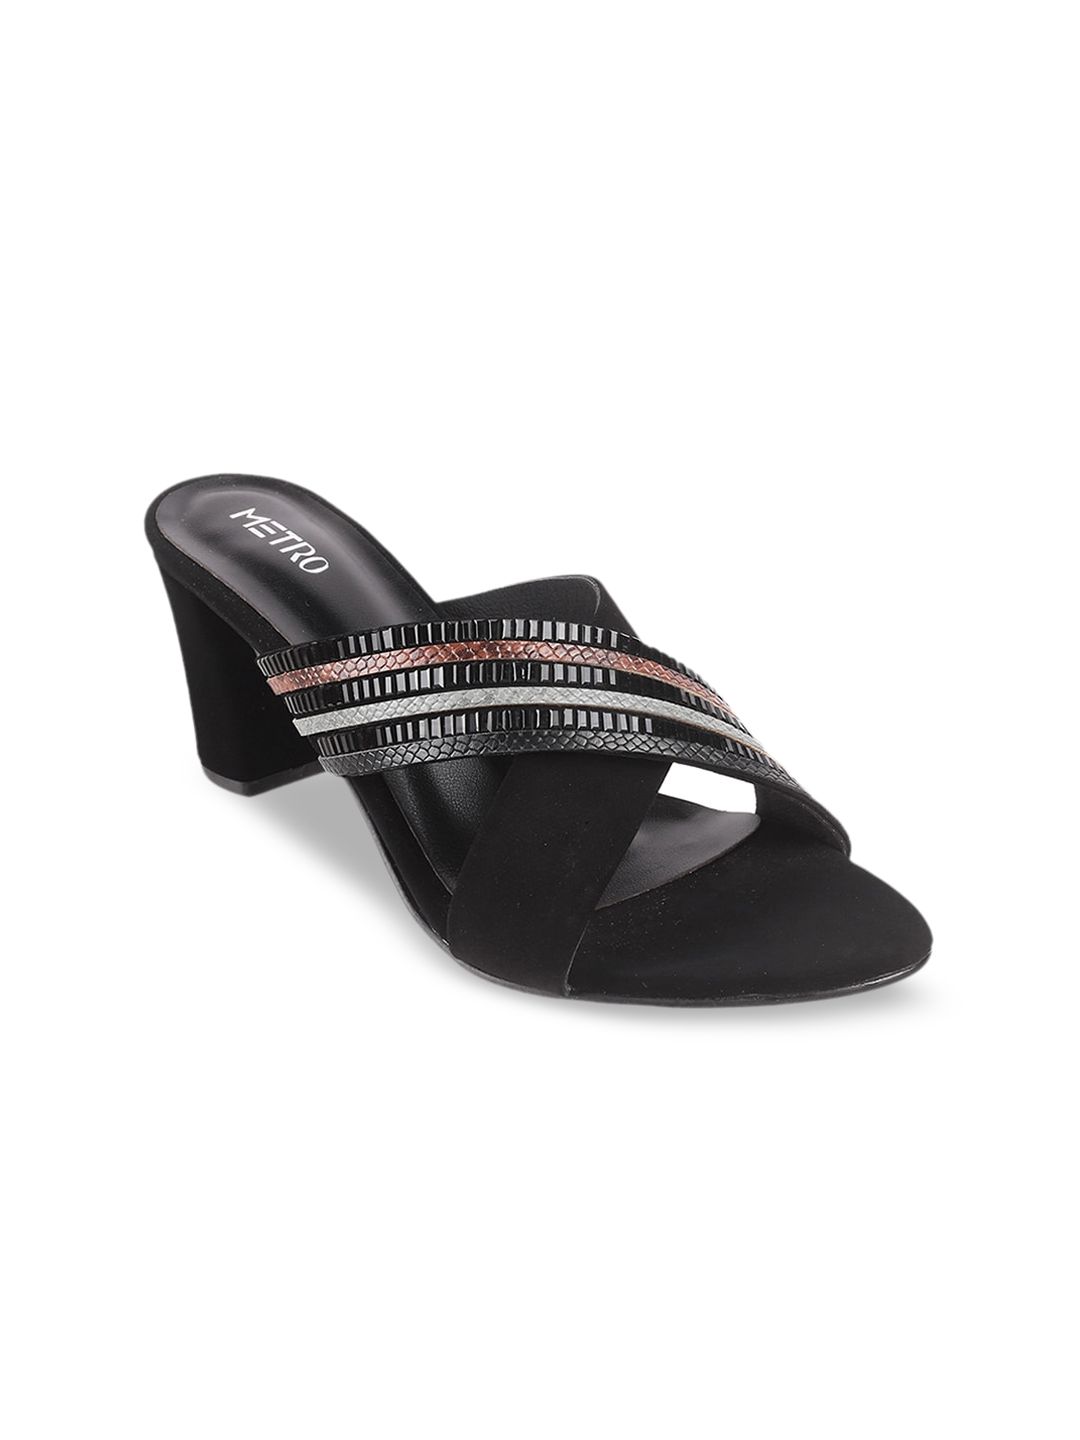 Metro Women Black Embellished Sandals Price in India